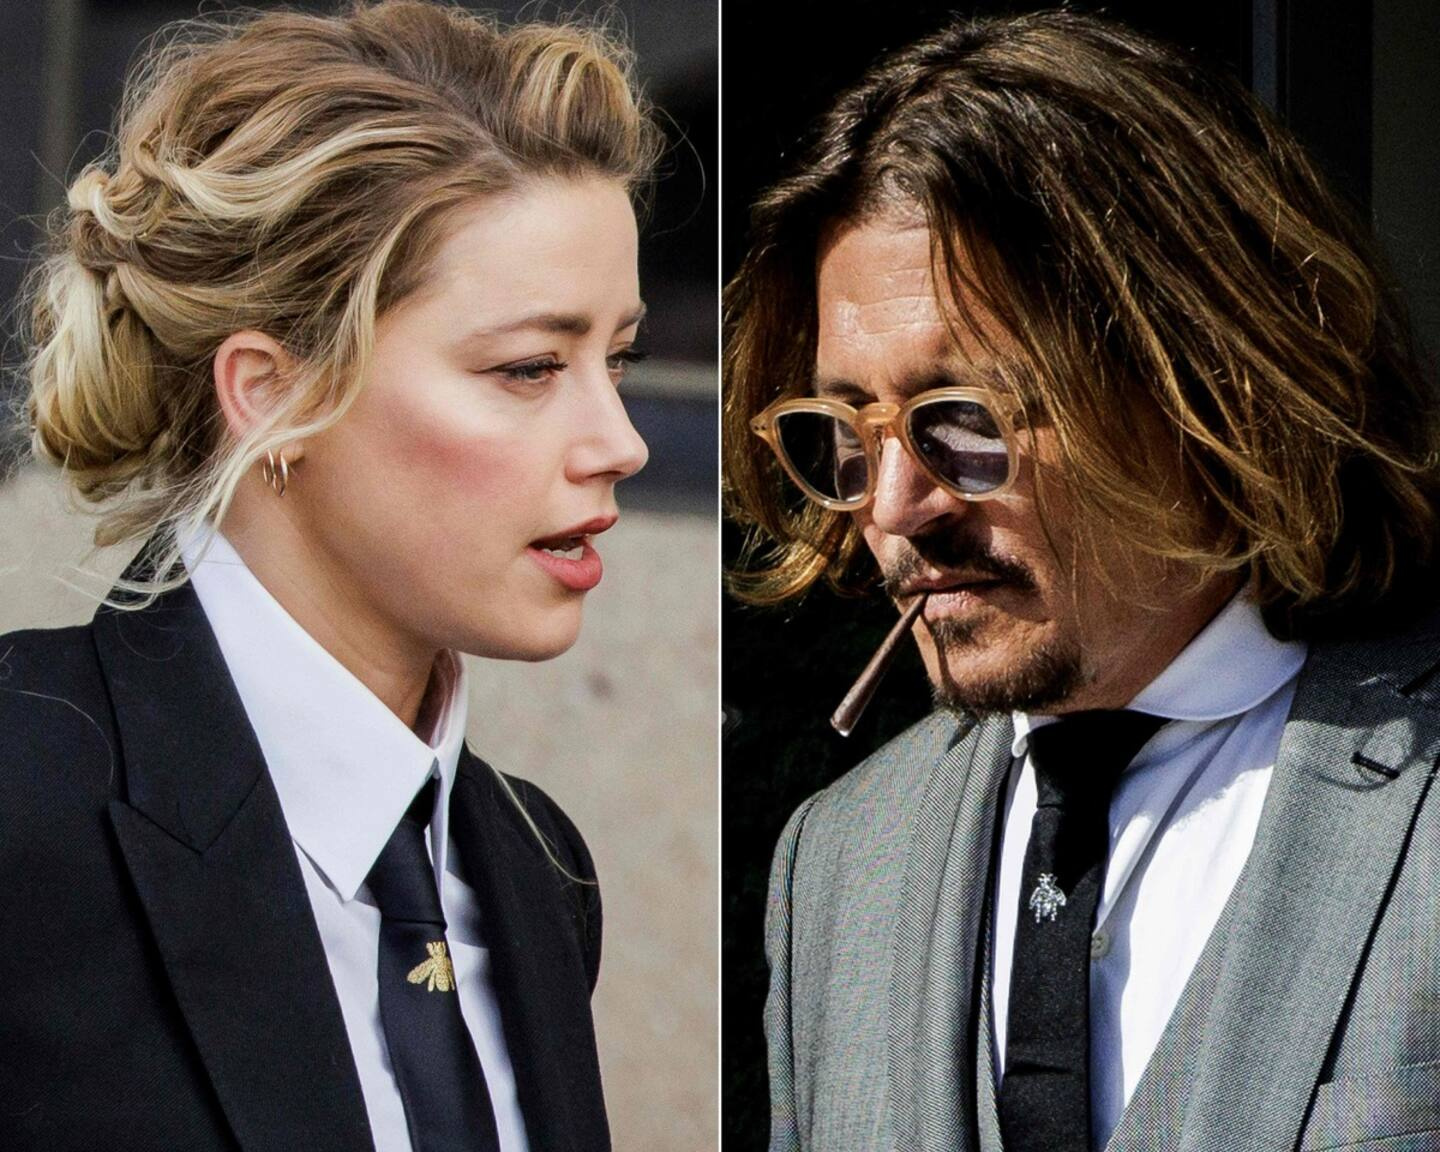 Amber Heard is appealing the verdict in her libel lawsuit against Johnny Depp